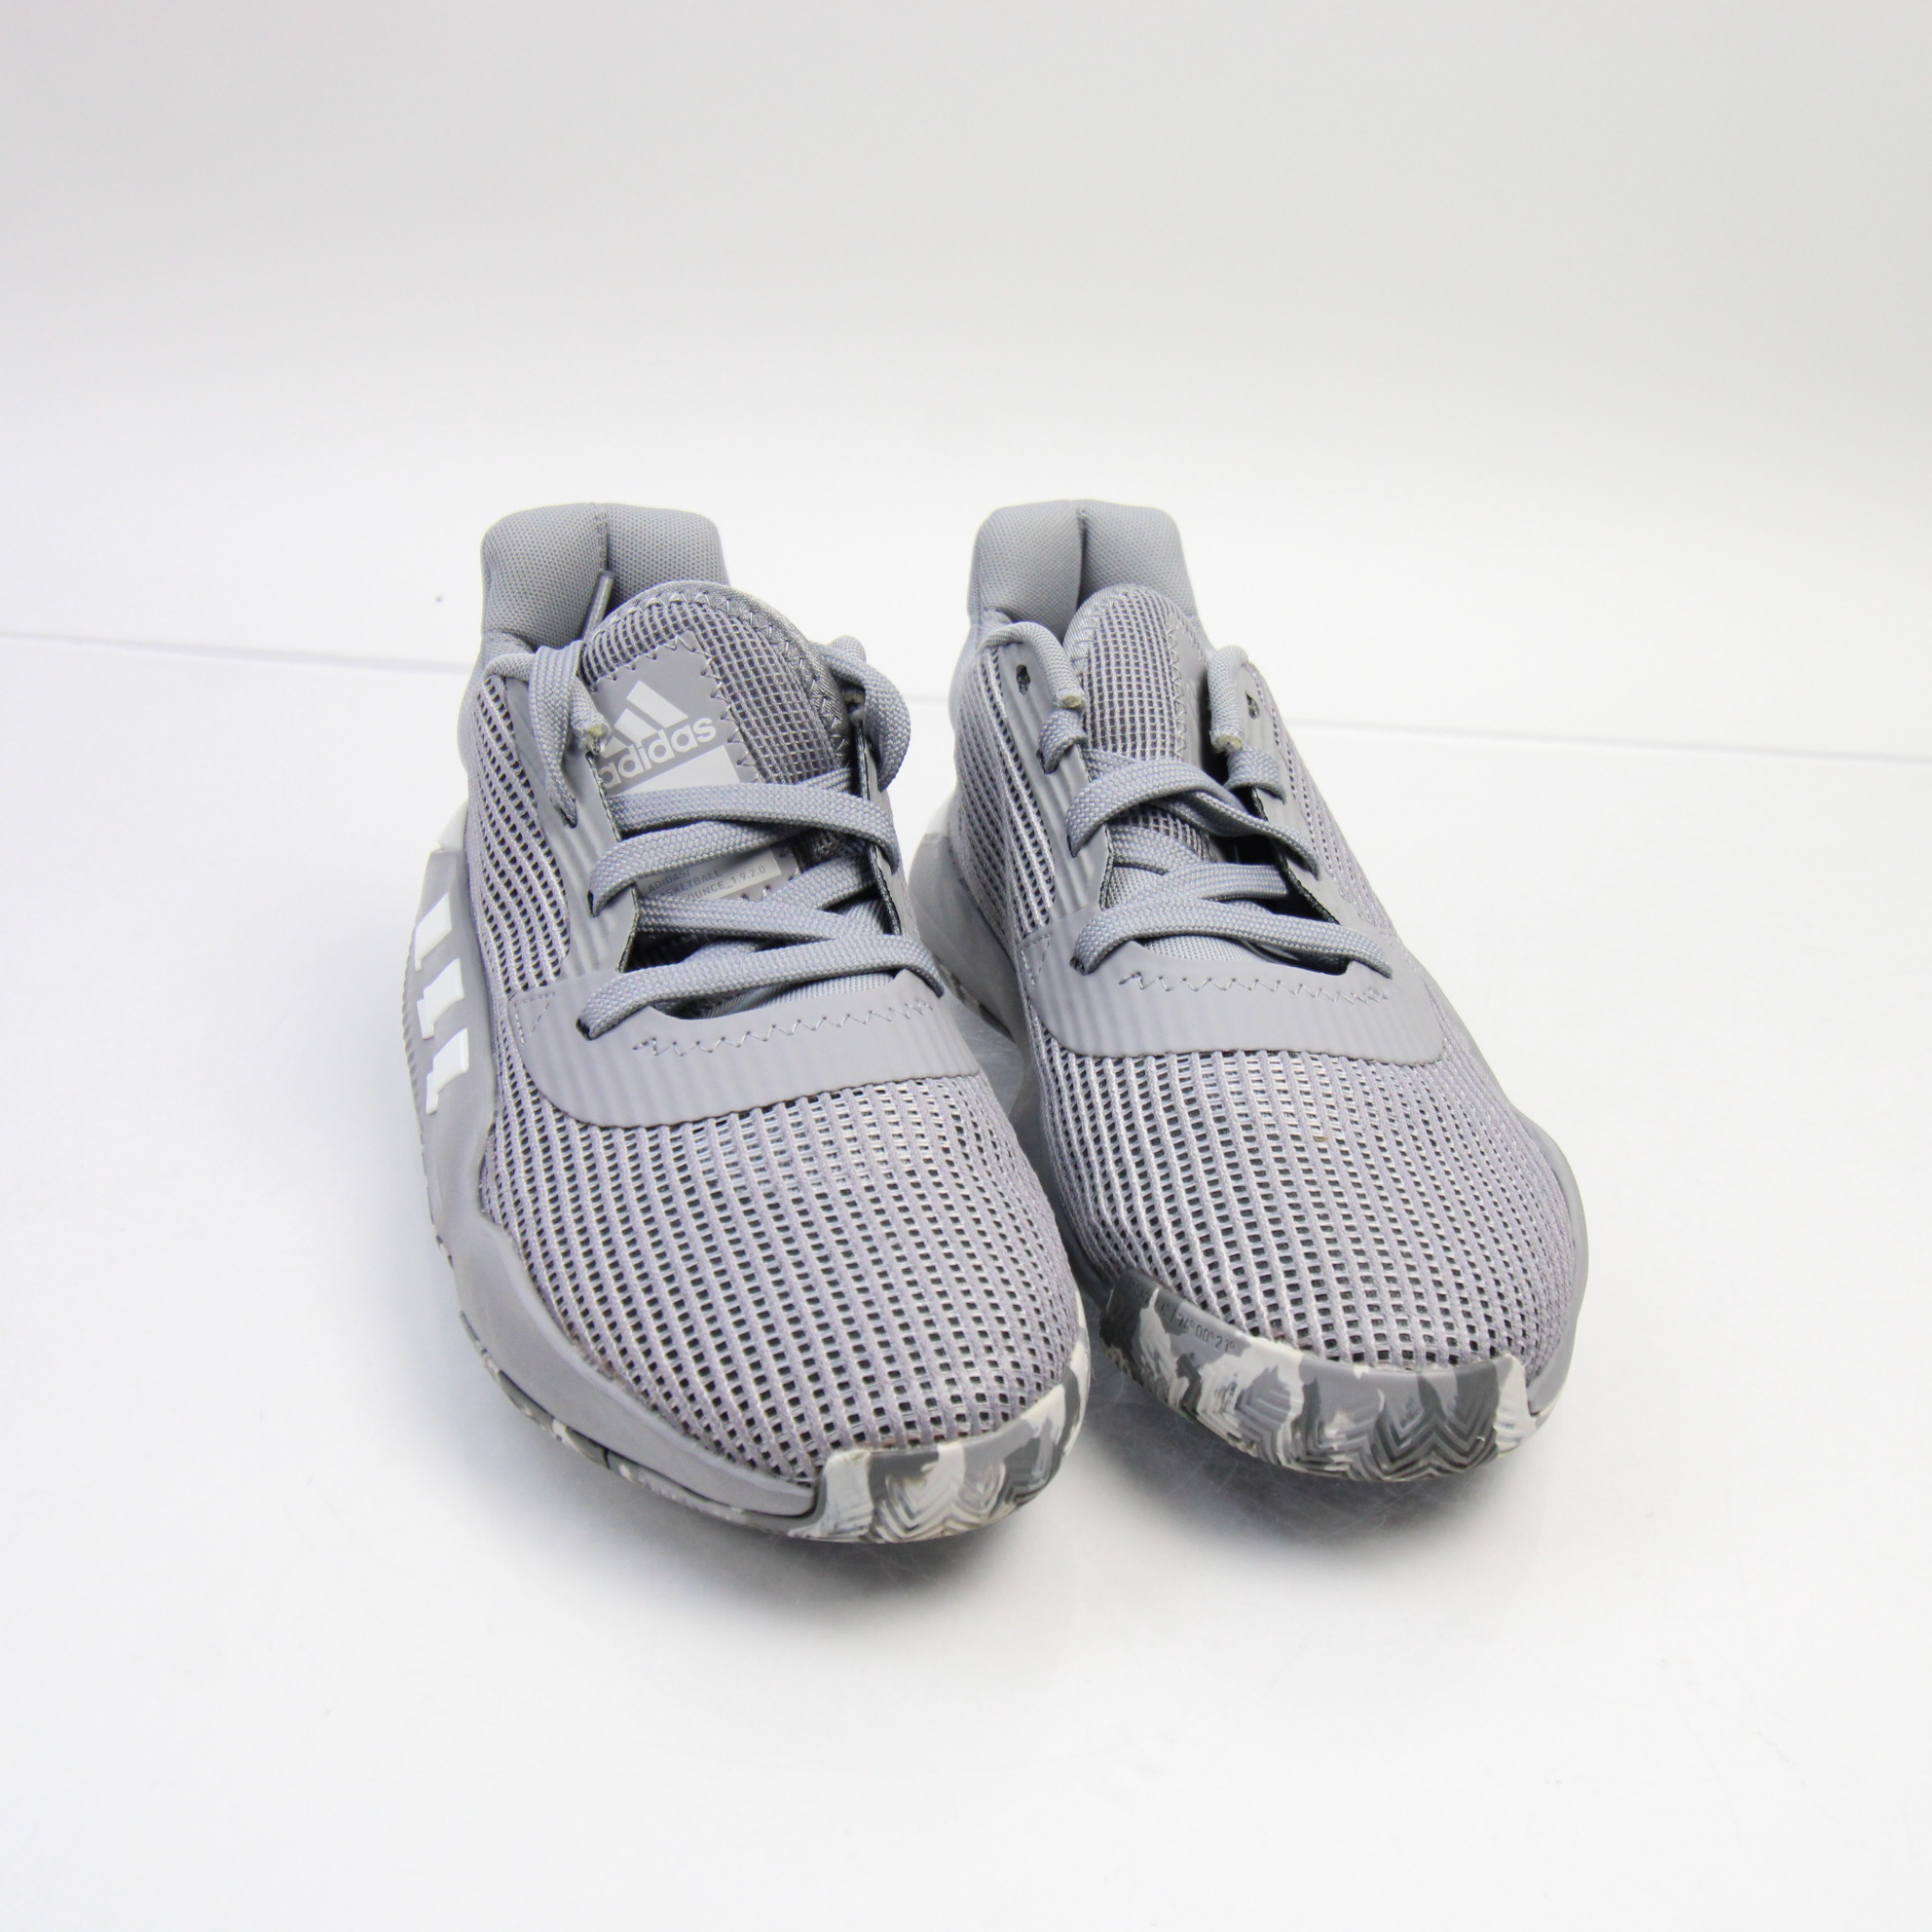 adidas Basketball Shoe Men's Gray New without Box | eBay